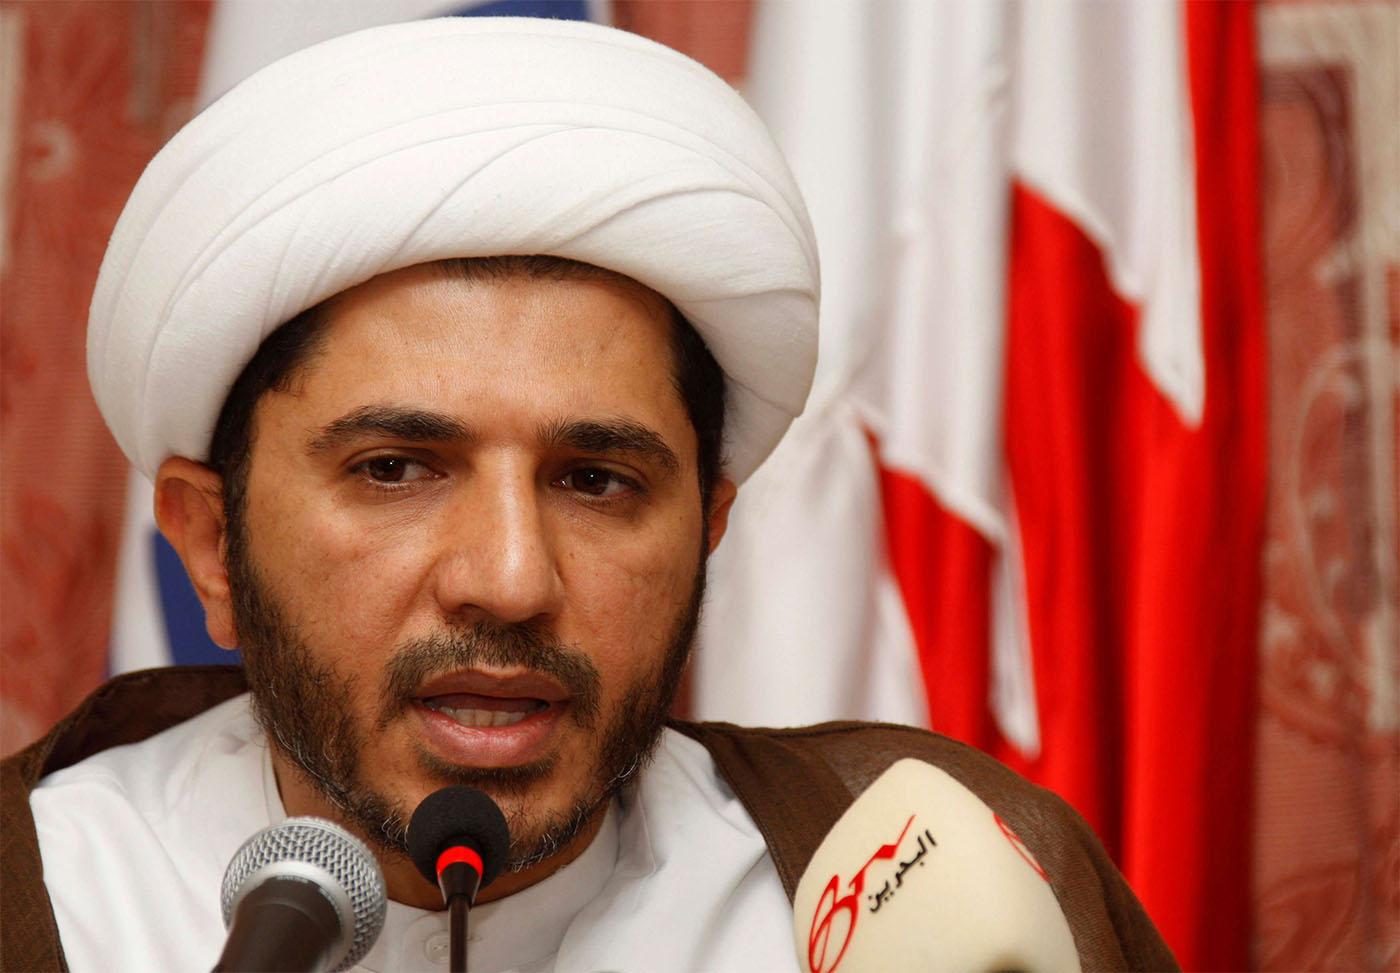 Sheikh Ali Salman, opposition party leader of Al Wefaq